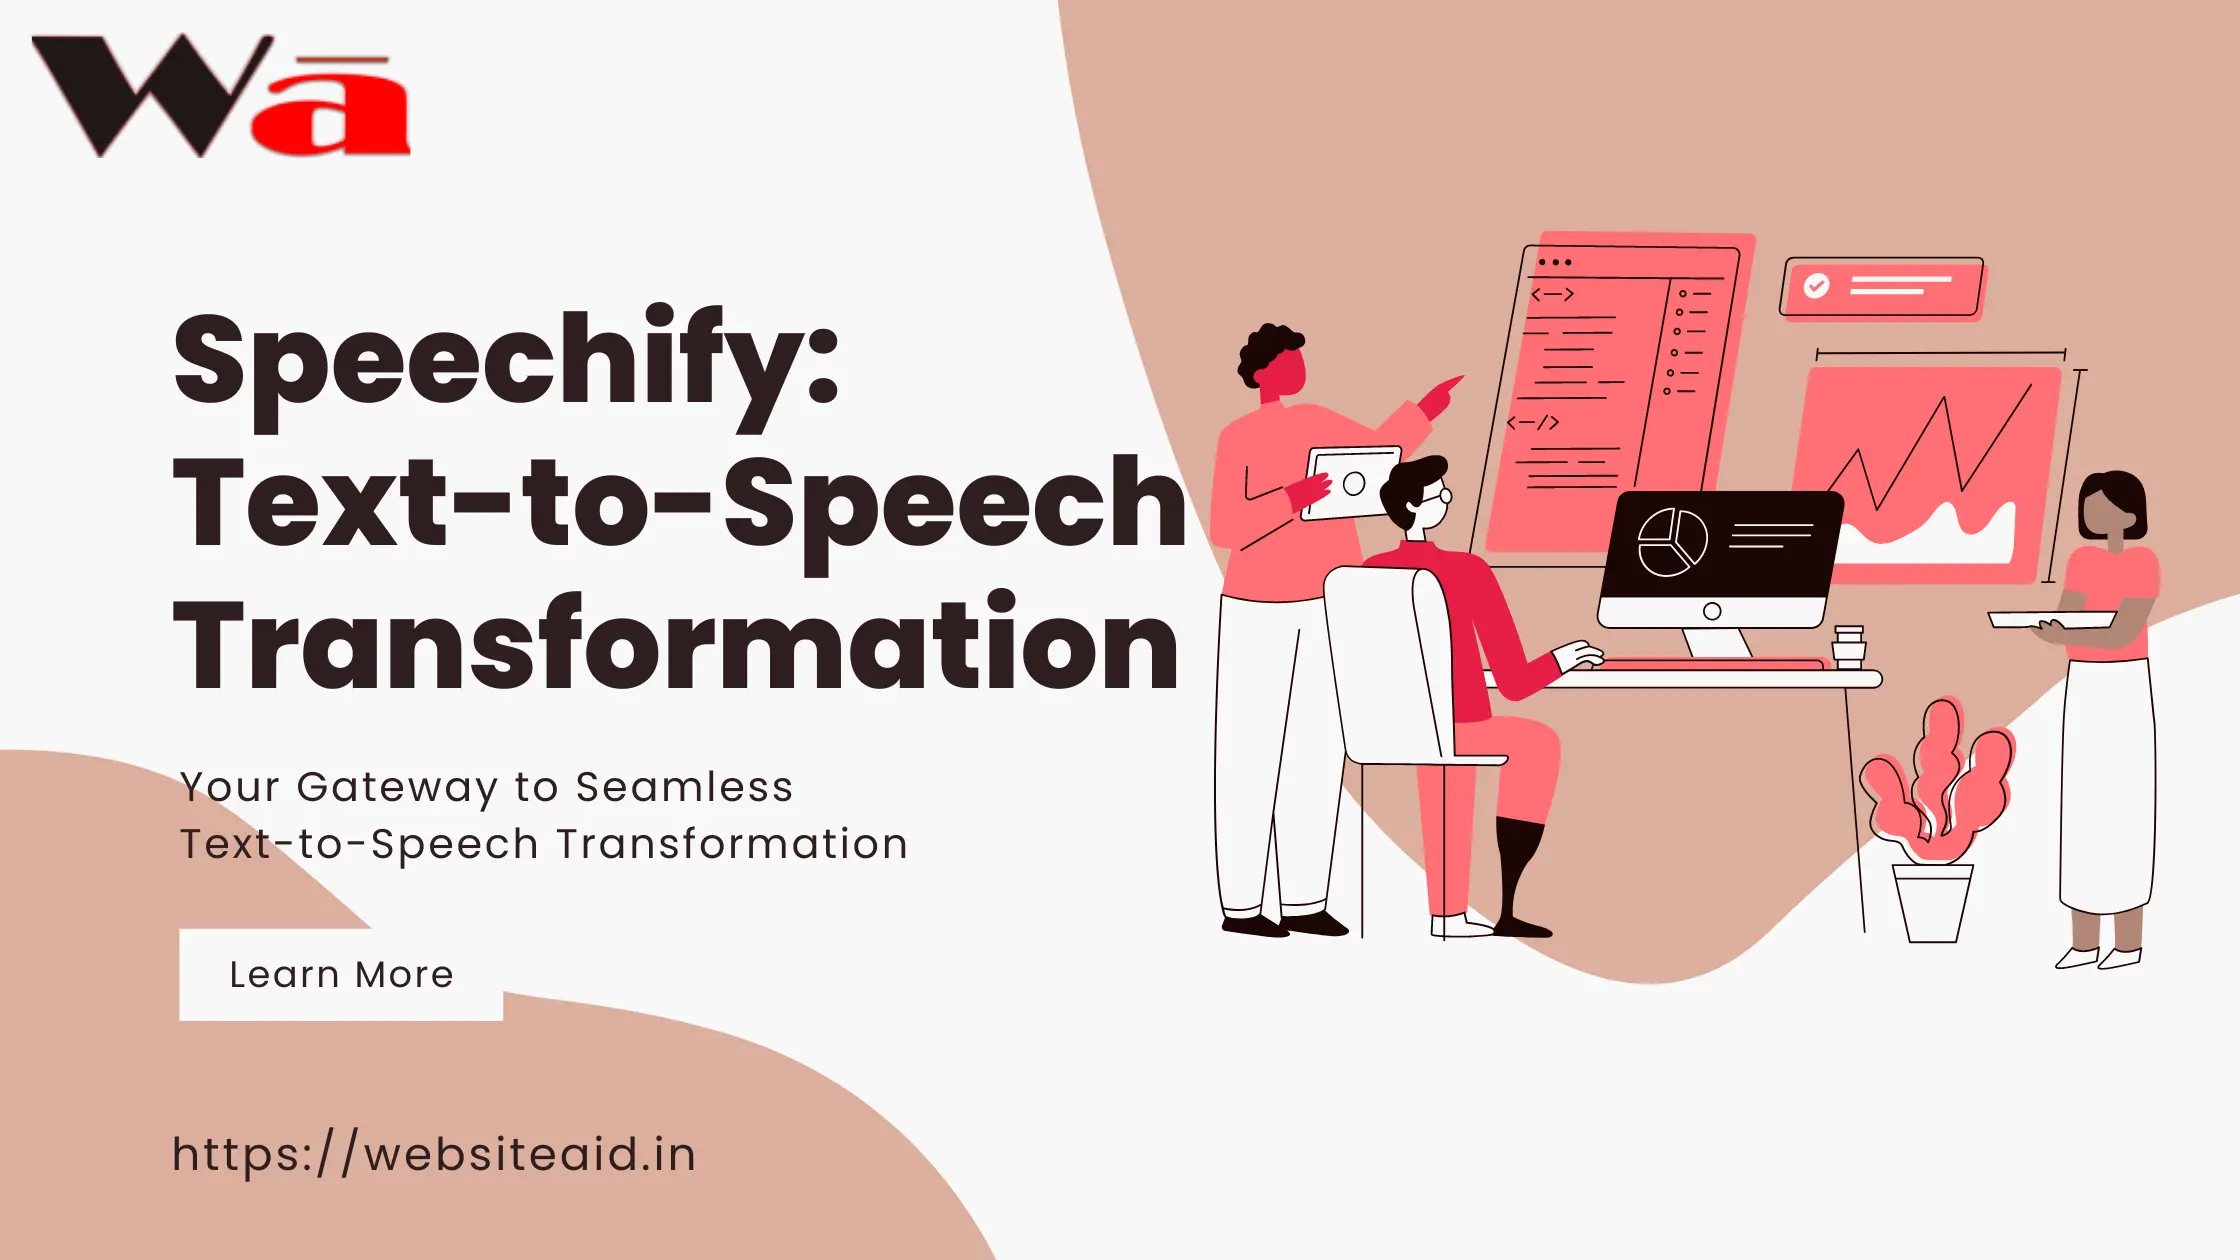 Speechify: Your Gateway to Seamless Text-to-Speech Transformation